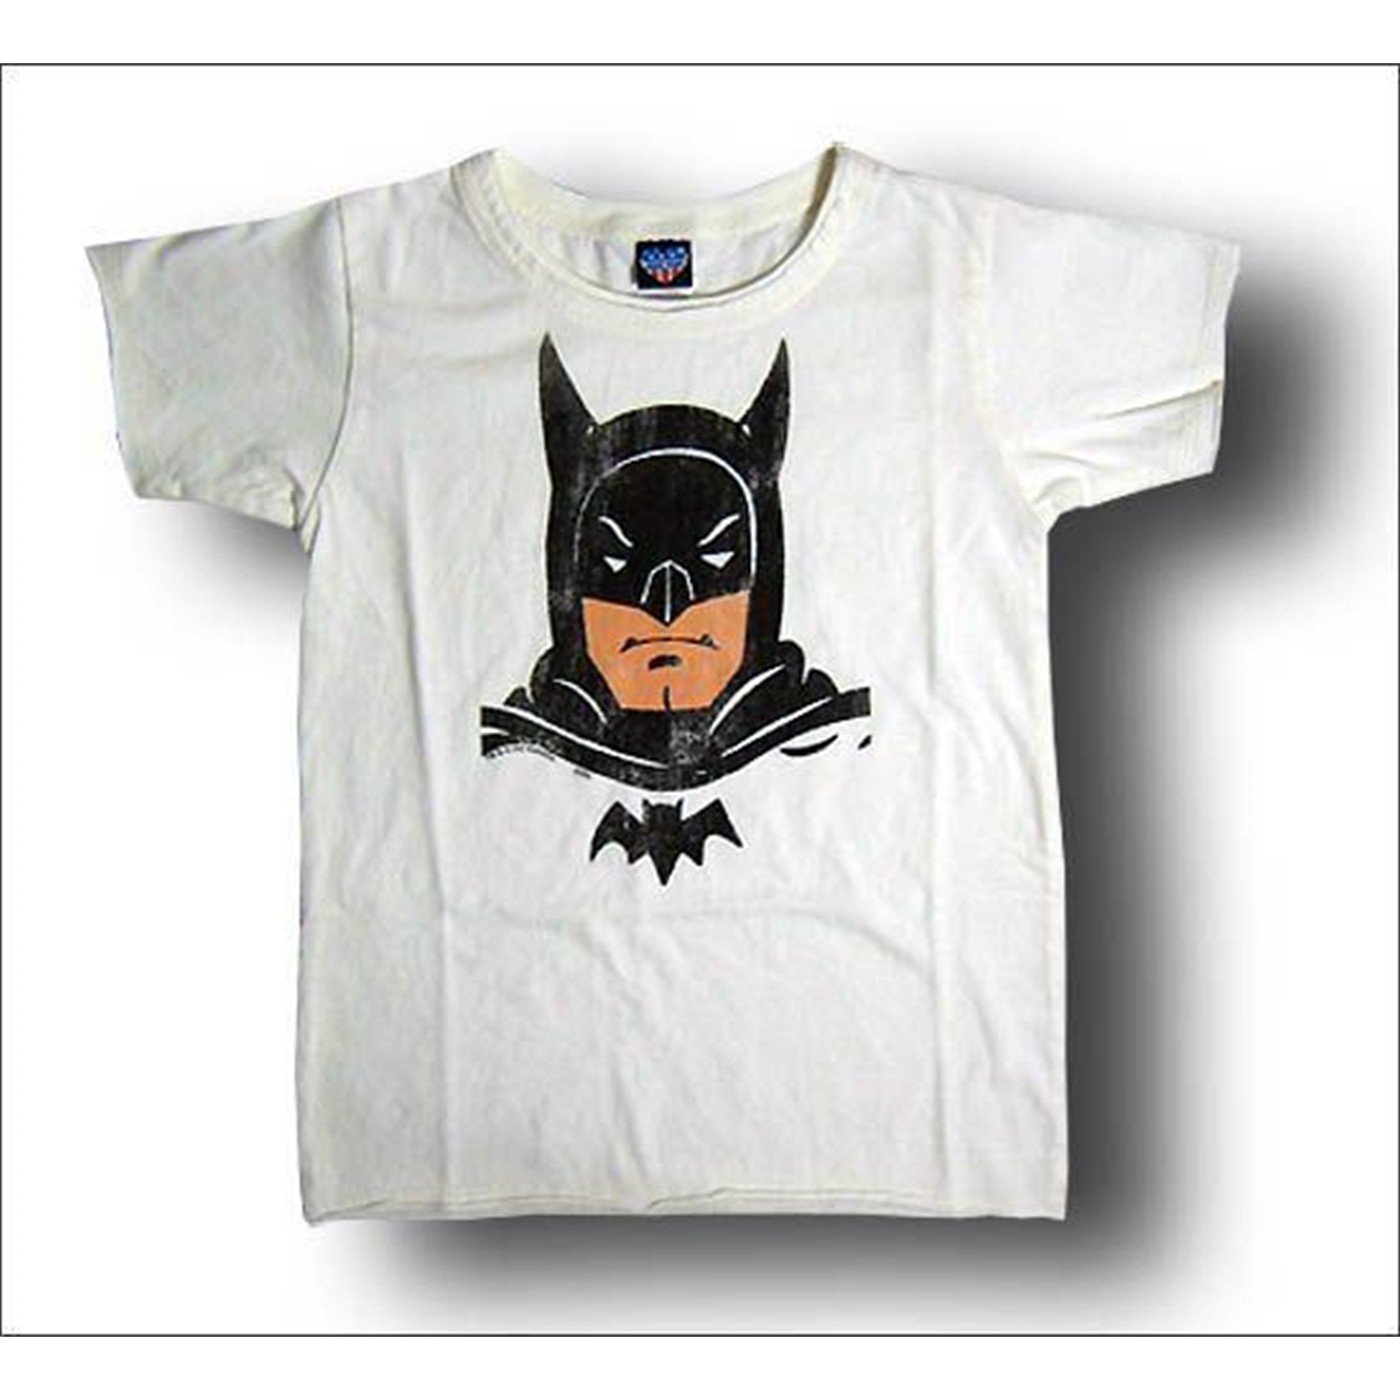 Batman Old School Toddler T-Shirt by Junk Food